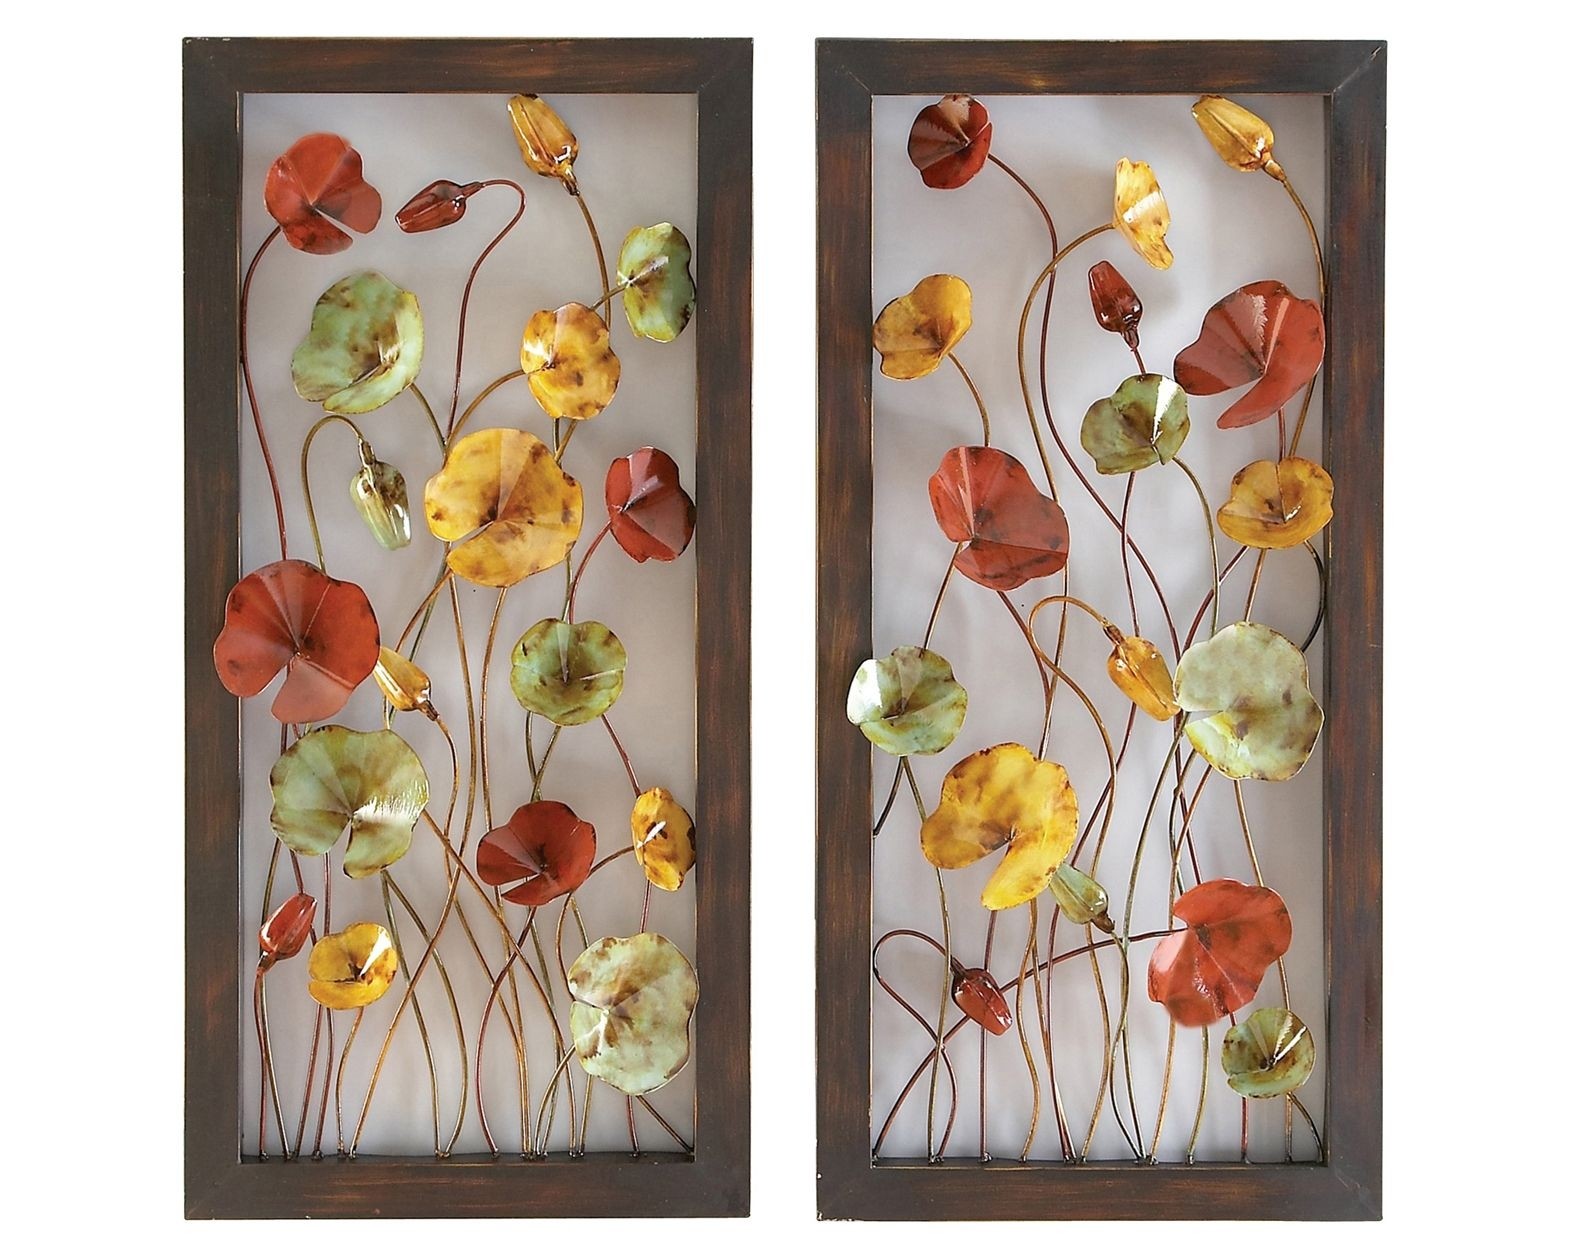 Details about  / Decorative Elegant Floral Tuscan Multi-Color Metal Wall Sculpture Art Panels NEW